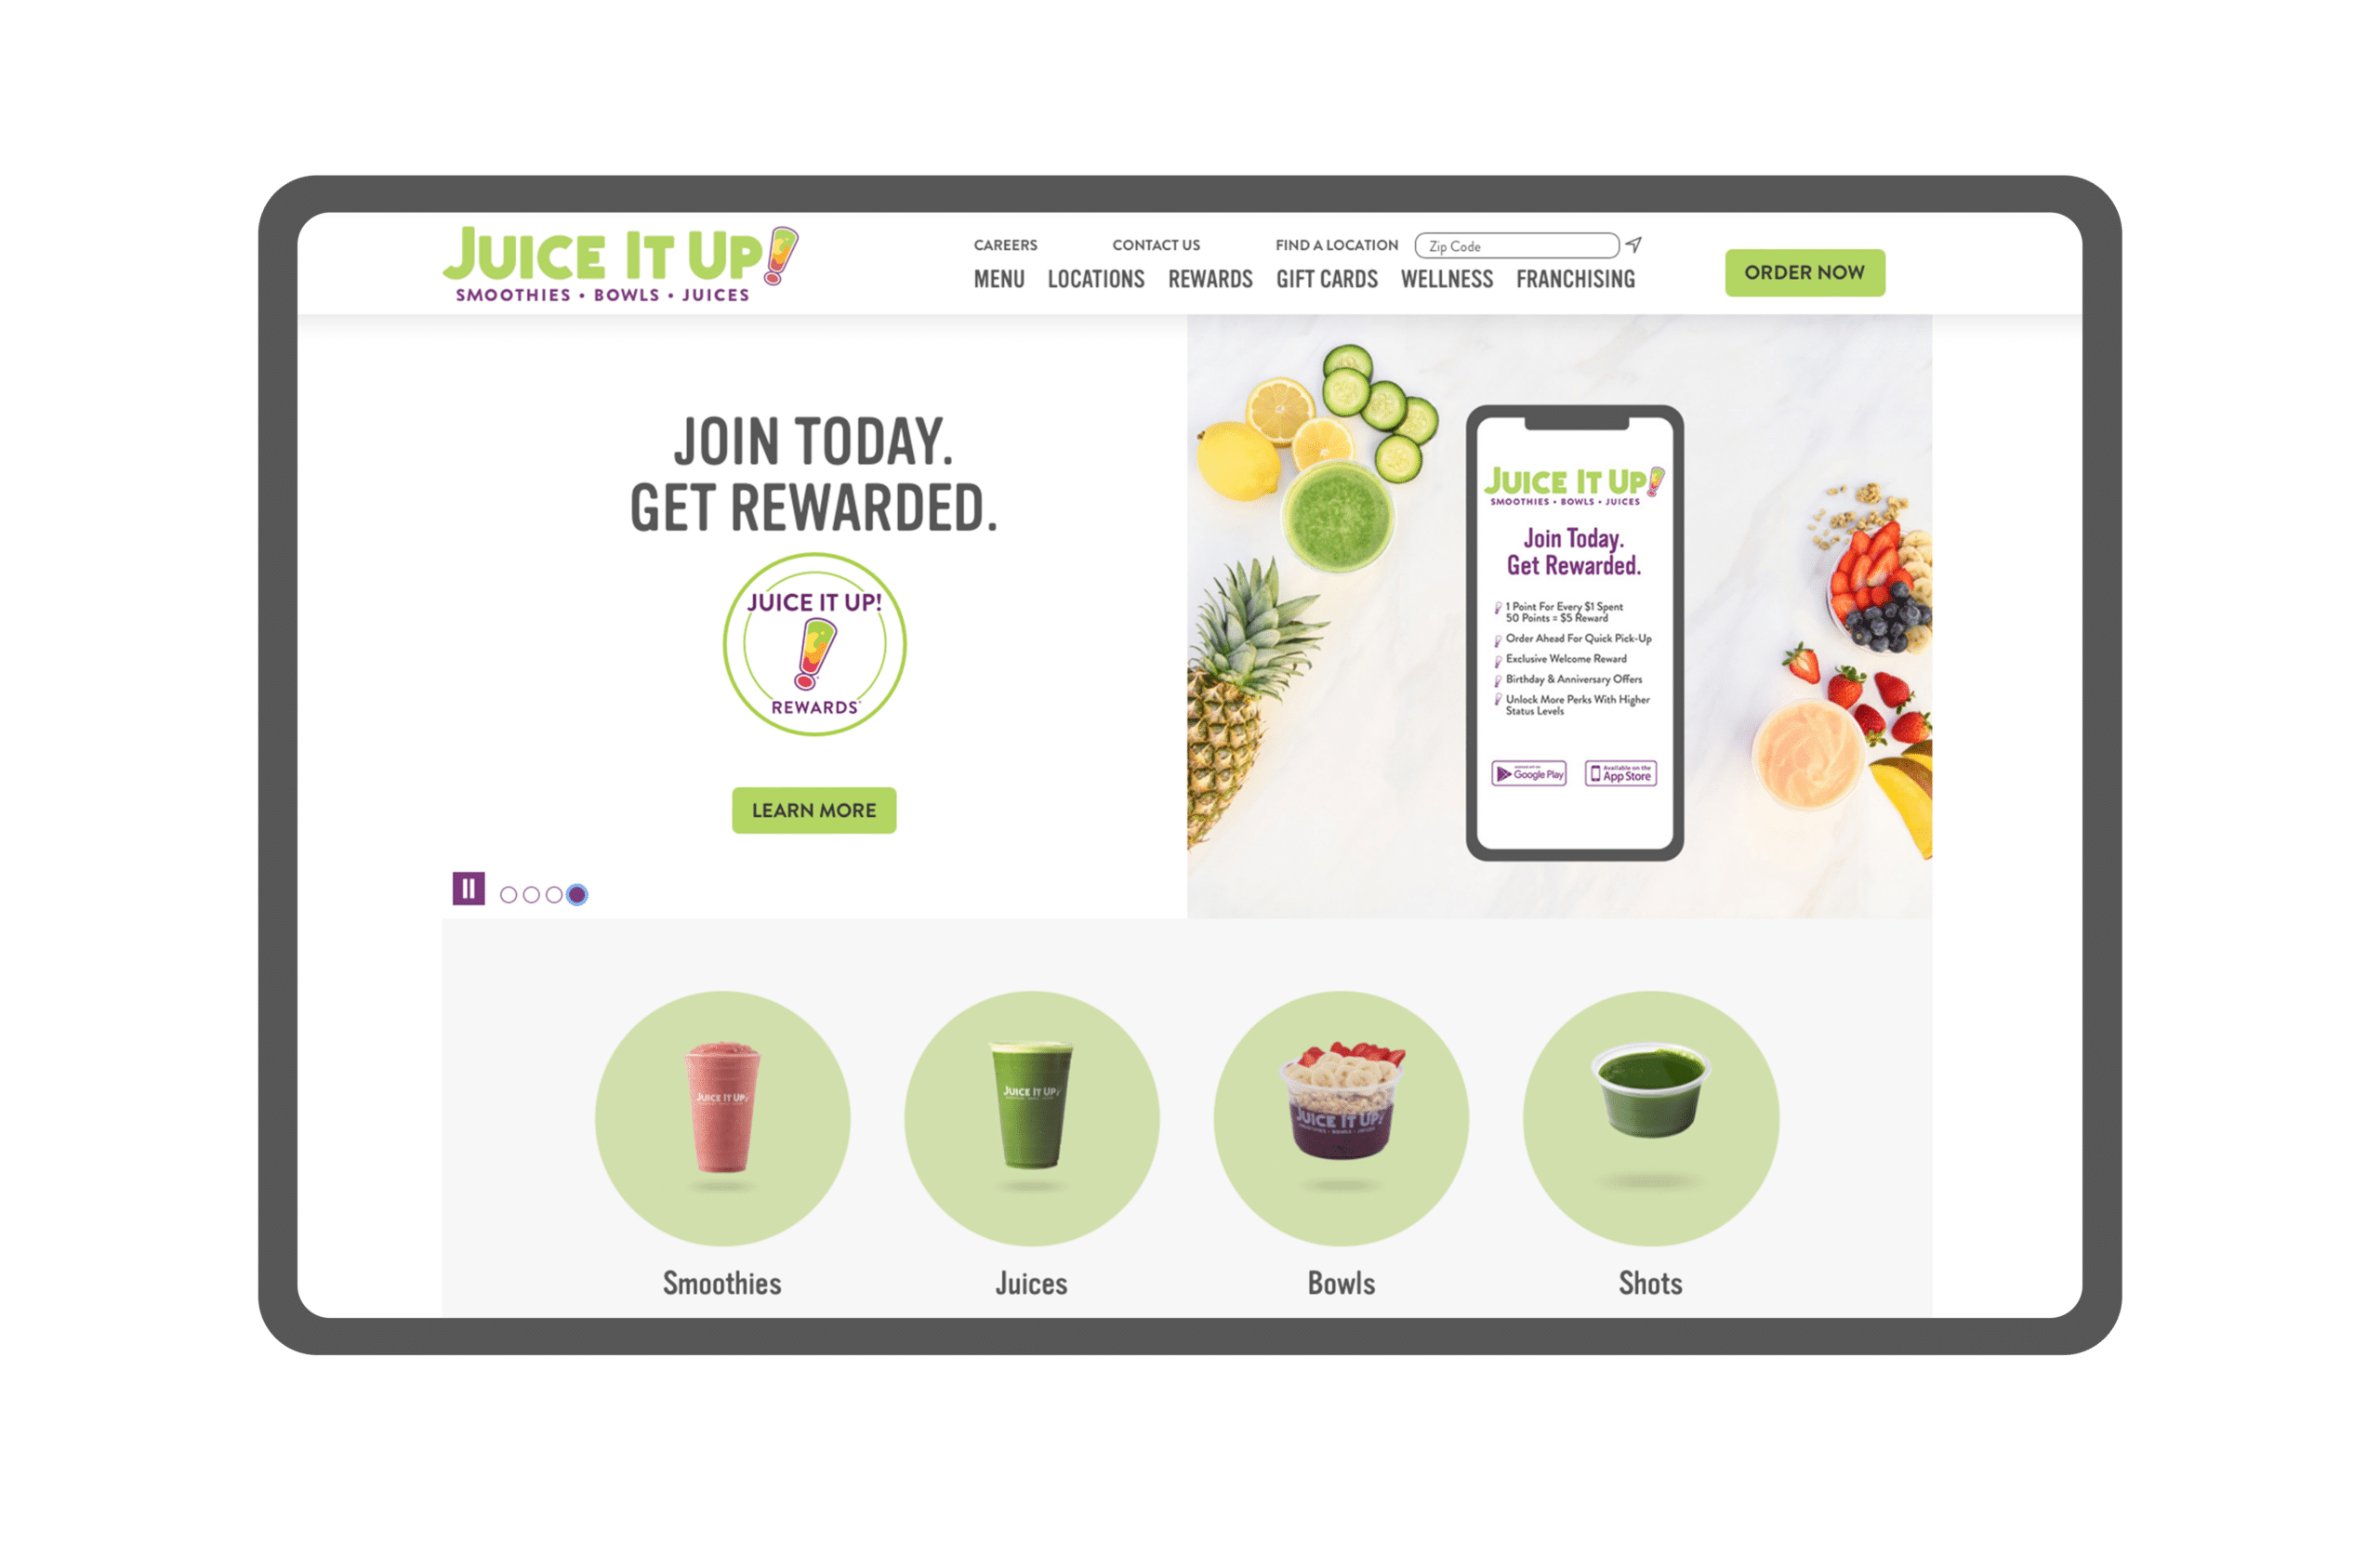 Juice It Up! Website Redesign by Stellen Design branding and logo design agency in Los Angeles California